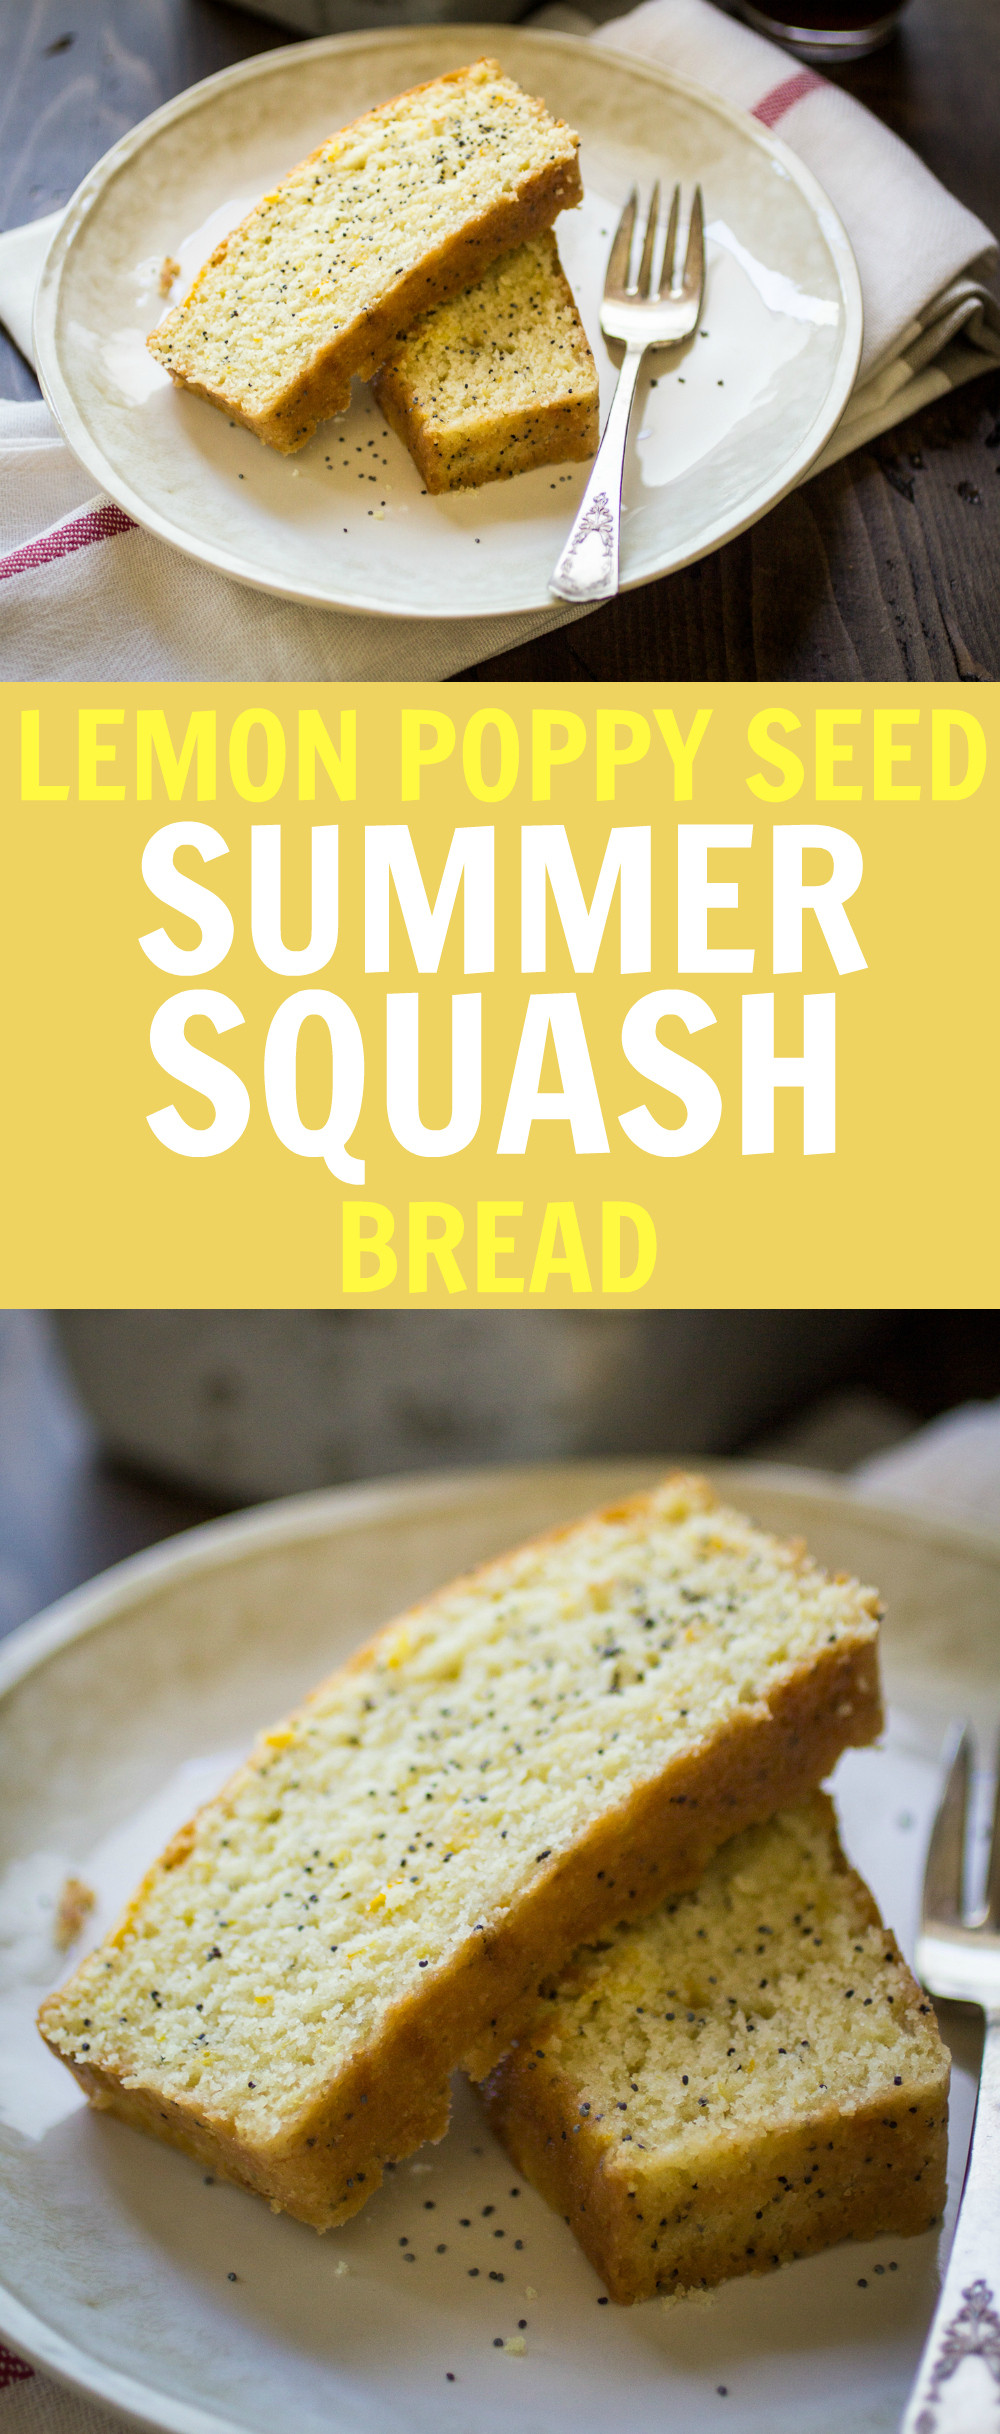 Summer Squash Bread Recipes
 sweet summer squash bread